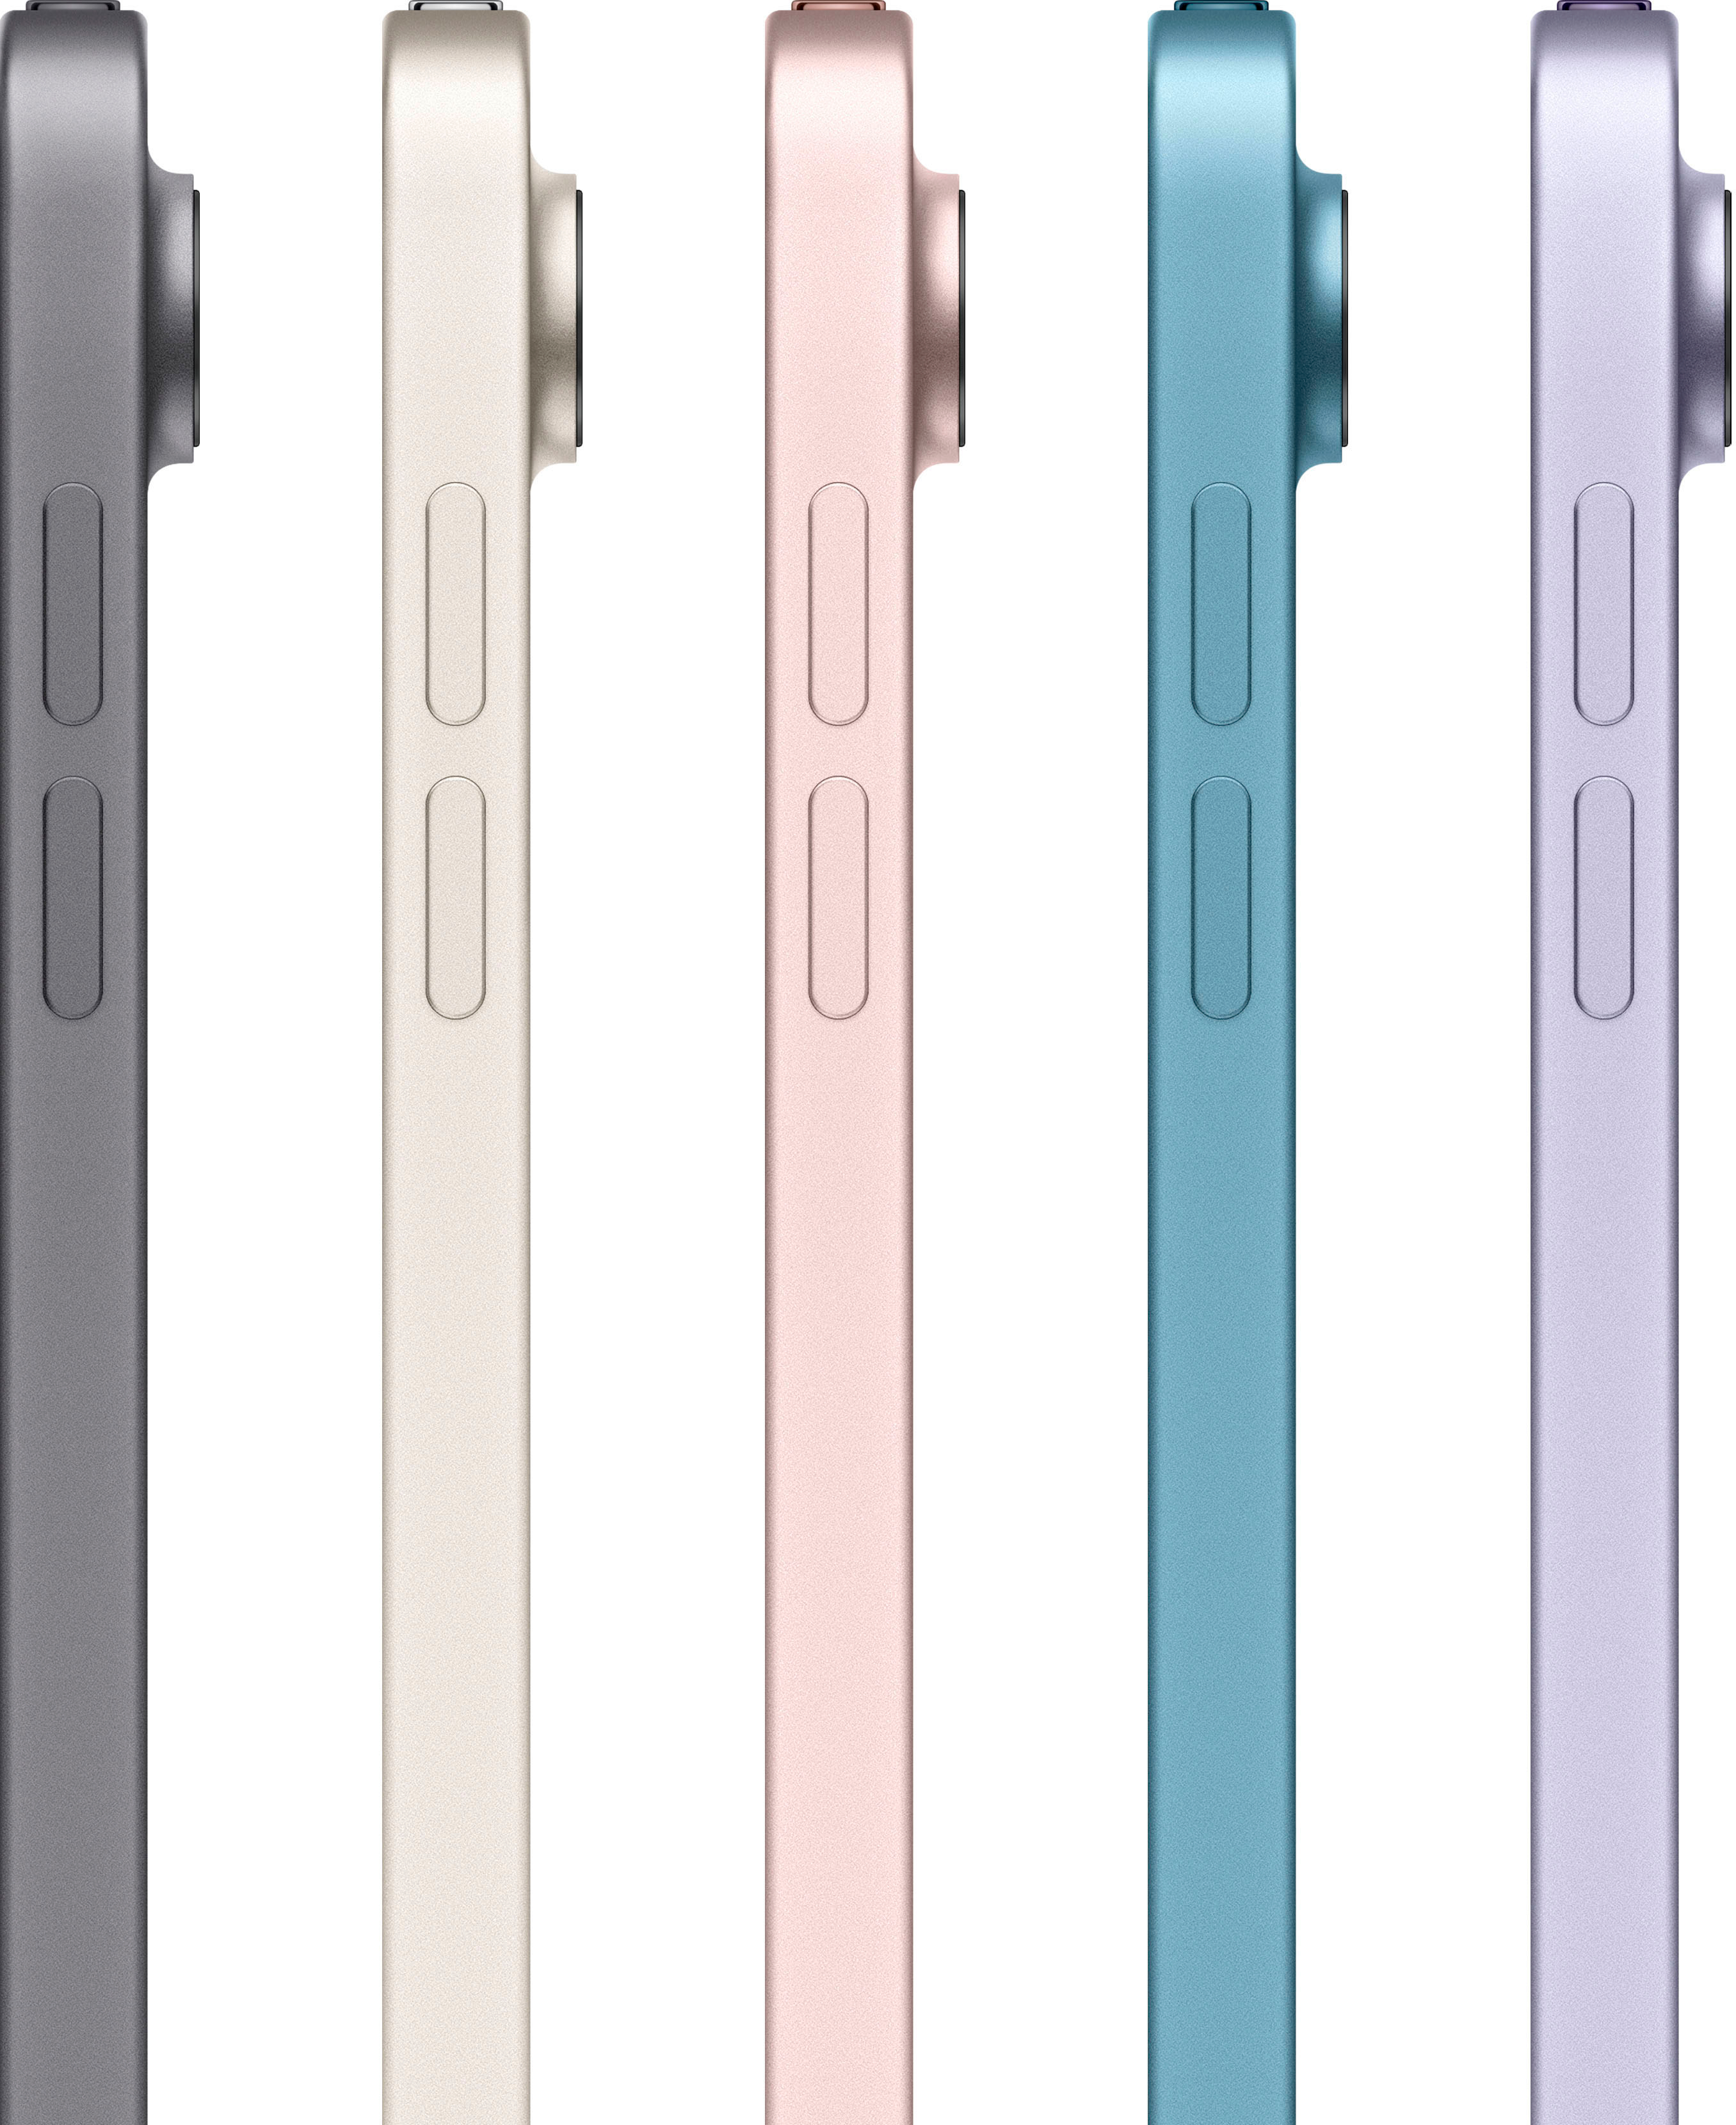  2020 Apple iPad Air (10.9-inch, Wi-Fi, 64GB) - Sky Blue  (Renewed) : Electronics